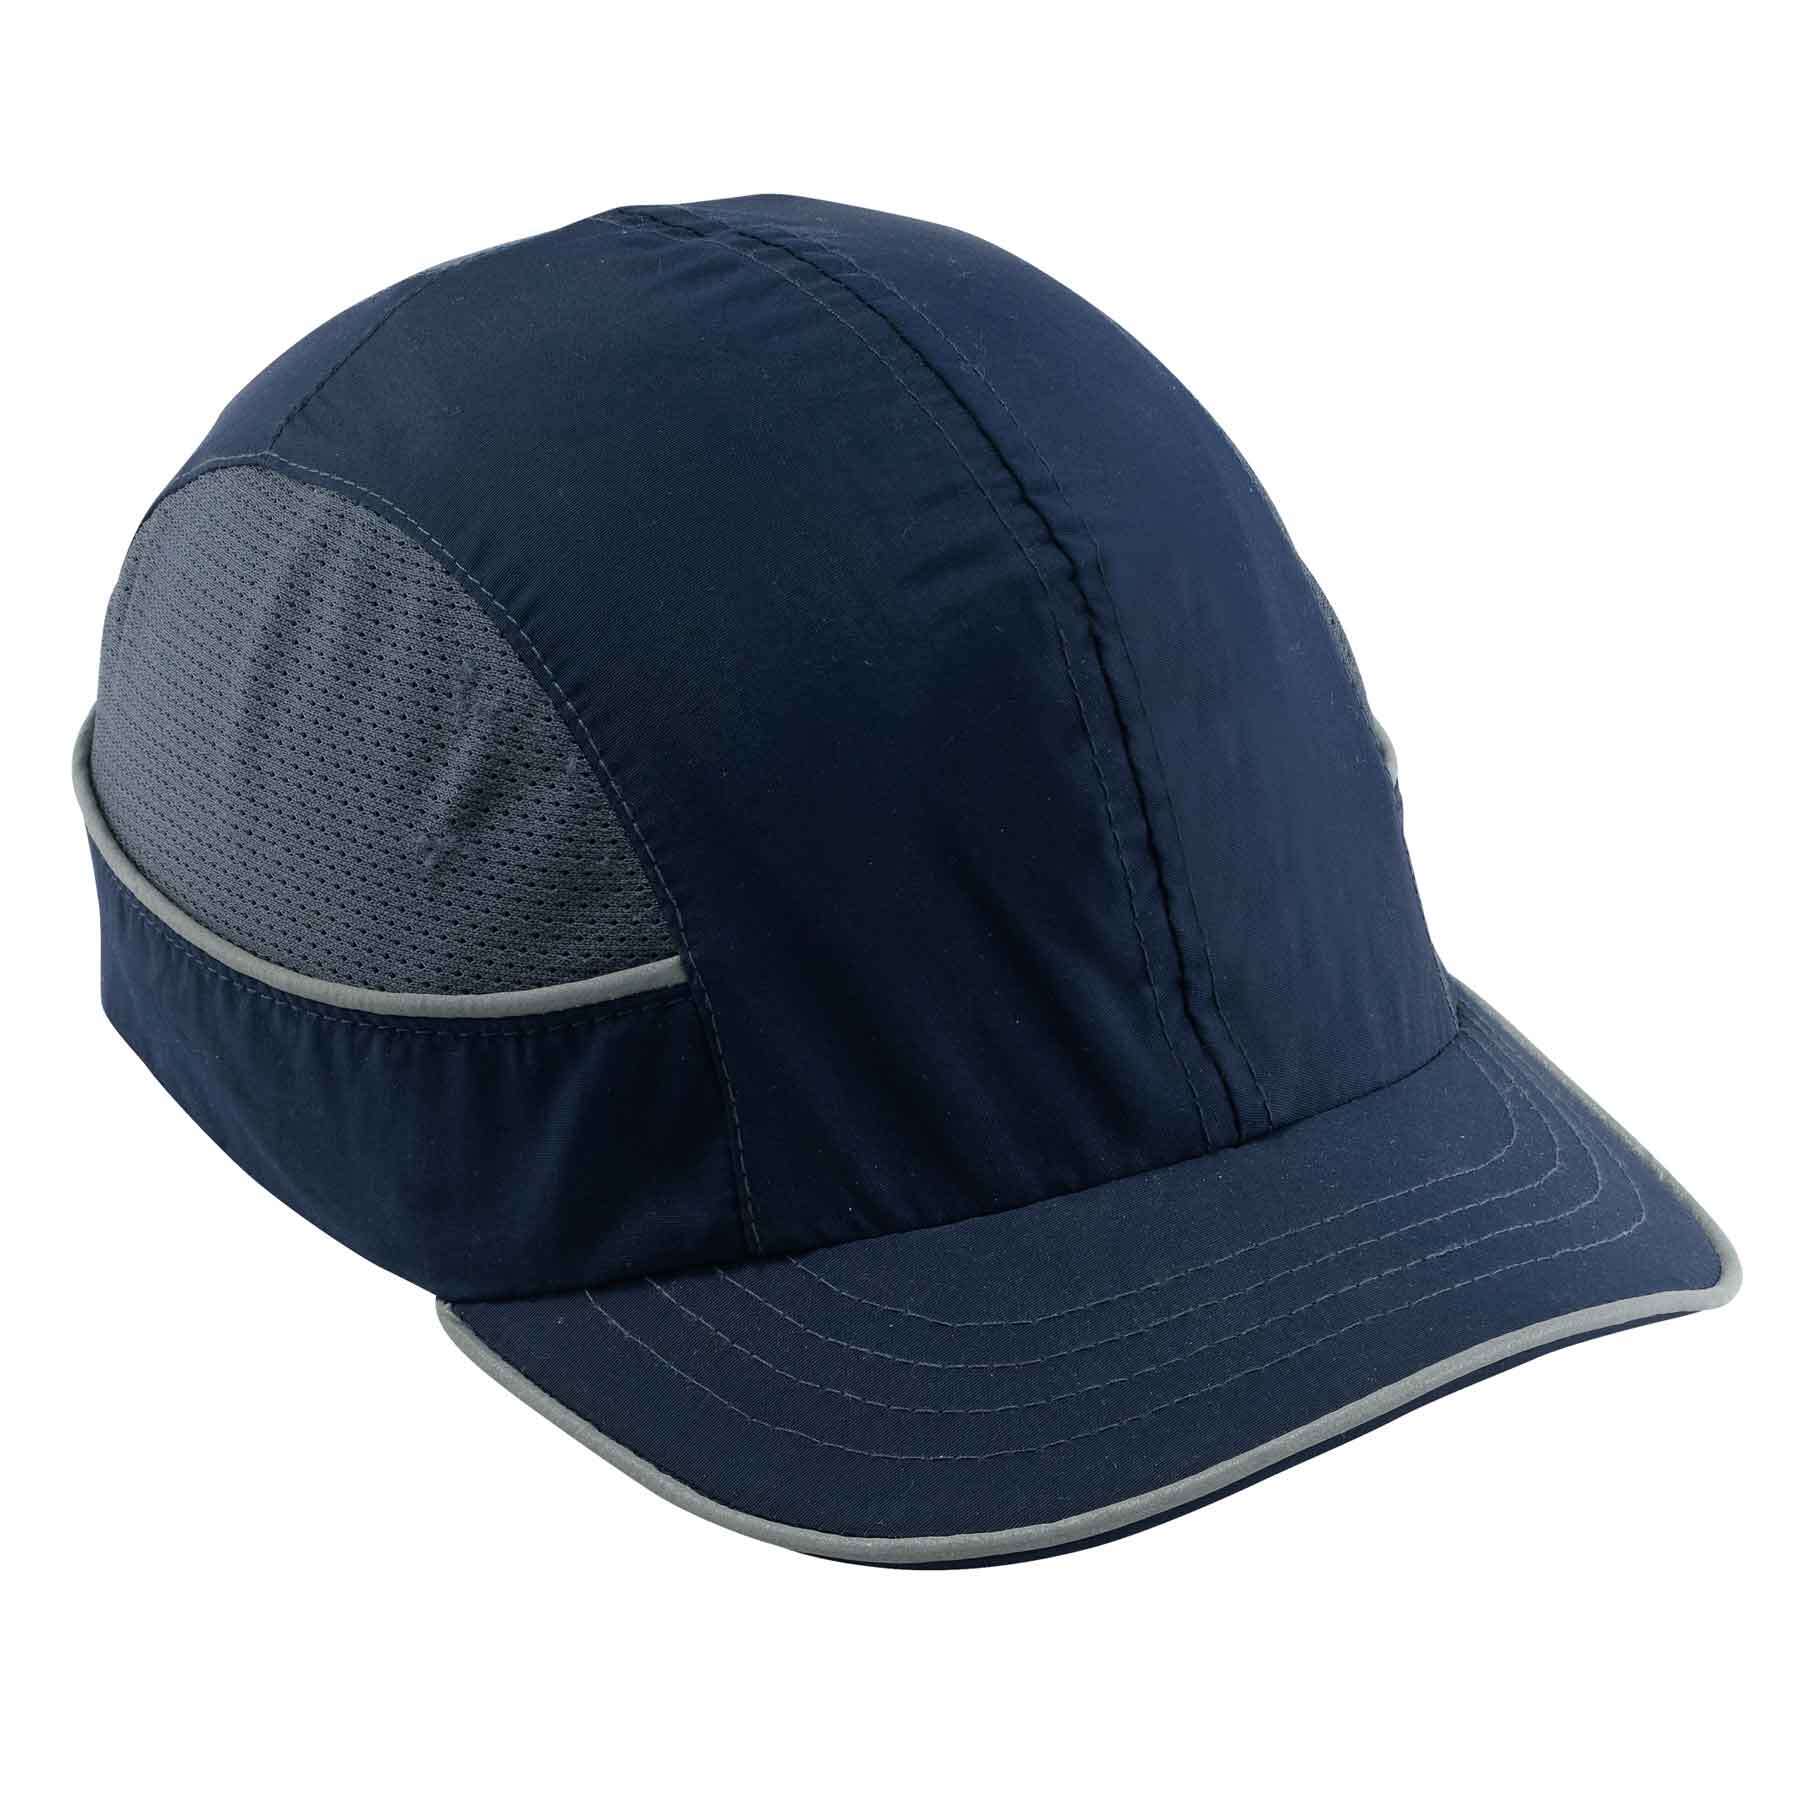 Bump Cap Hat